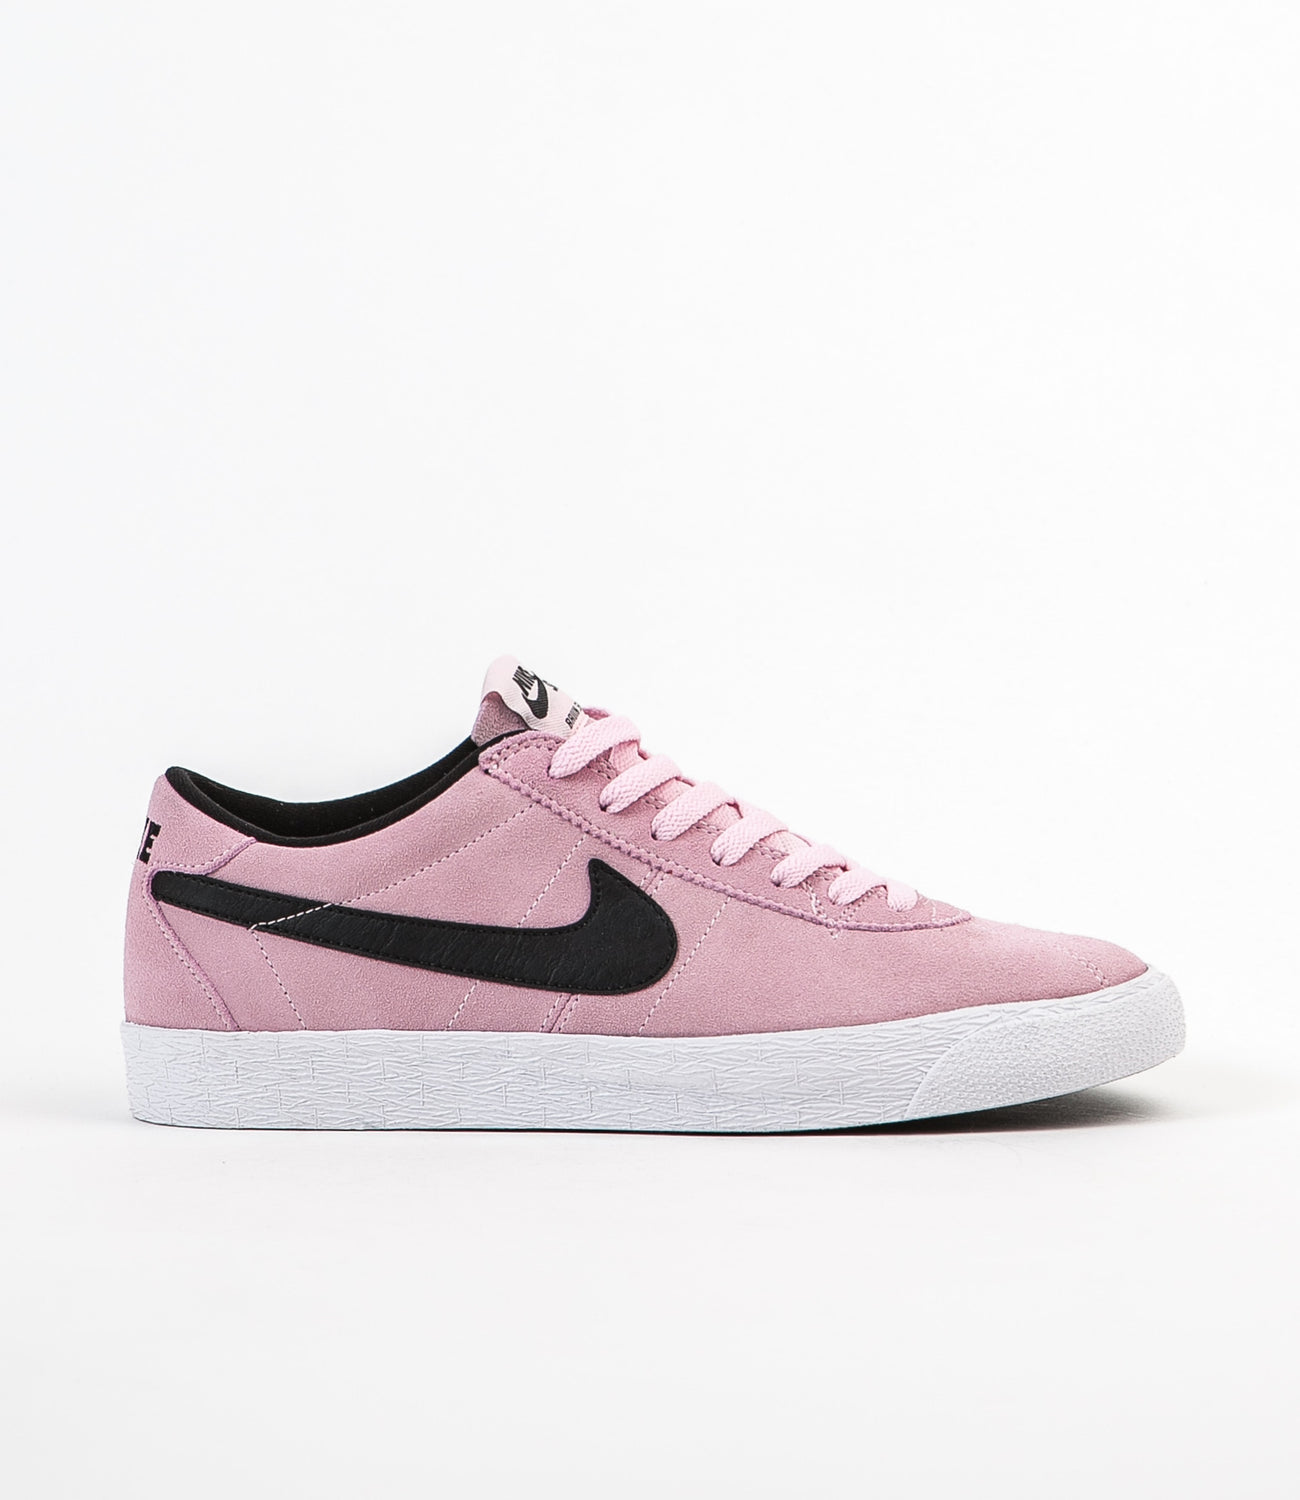 Nike SB Bruin SE Shoes Prism Pink / White | Flatspot